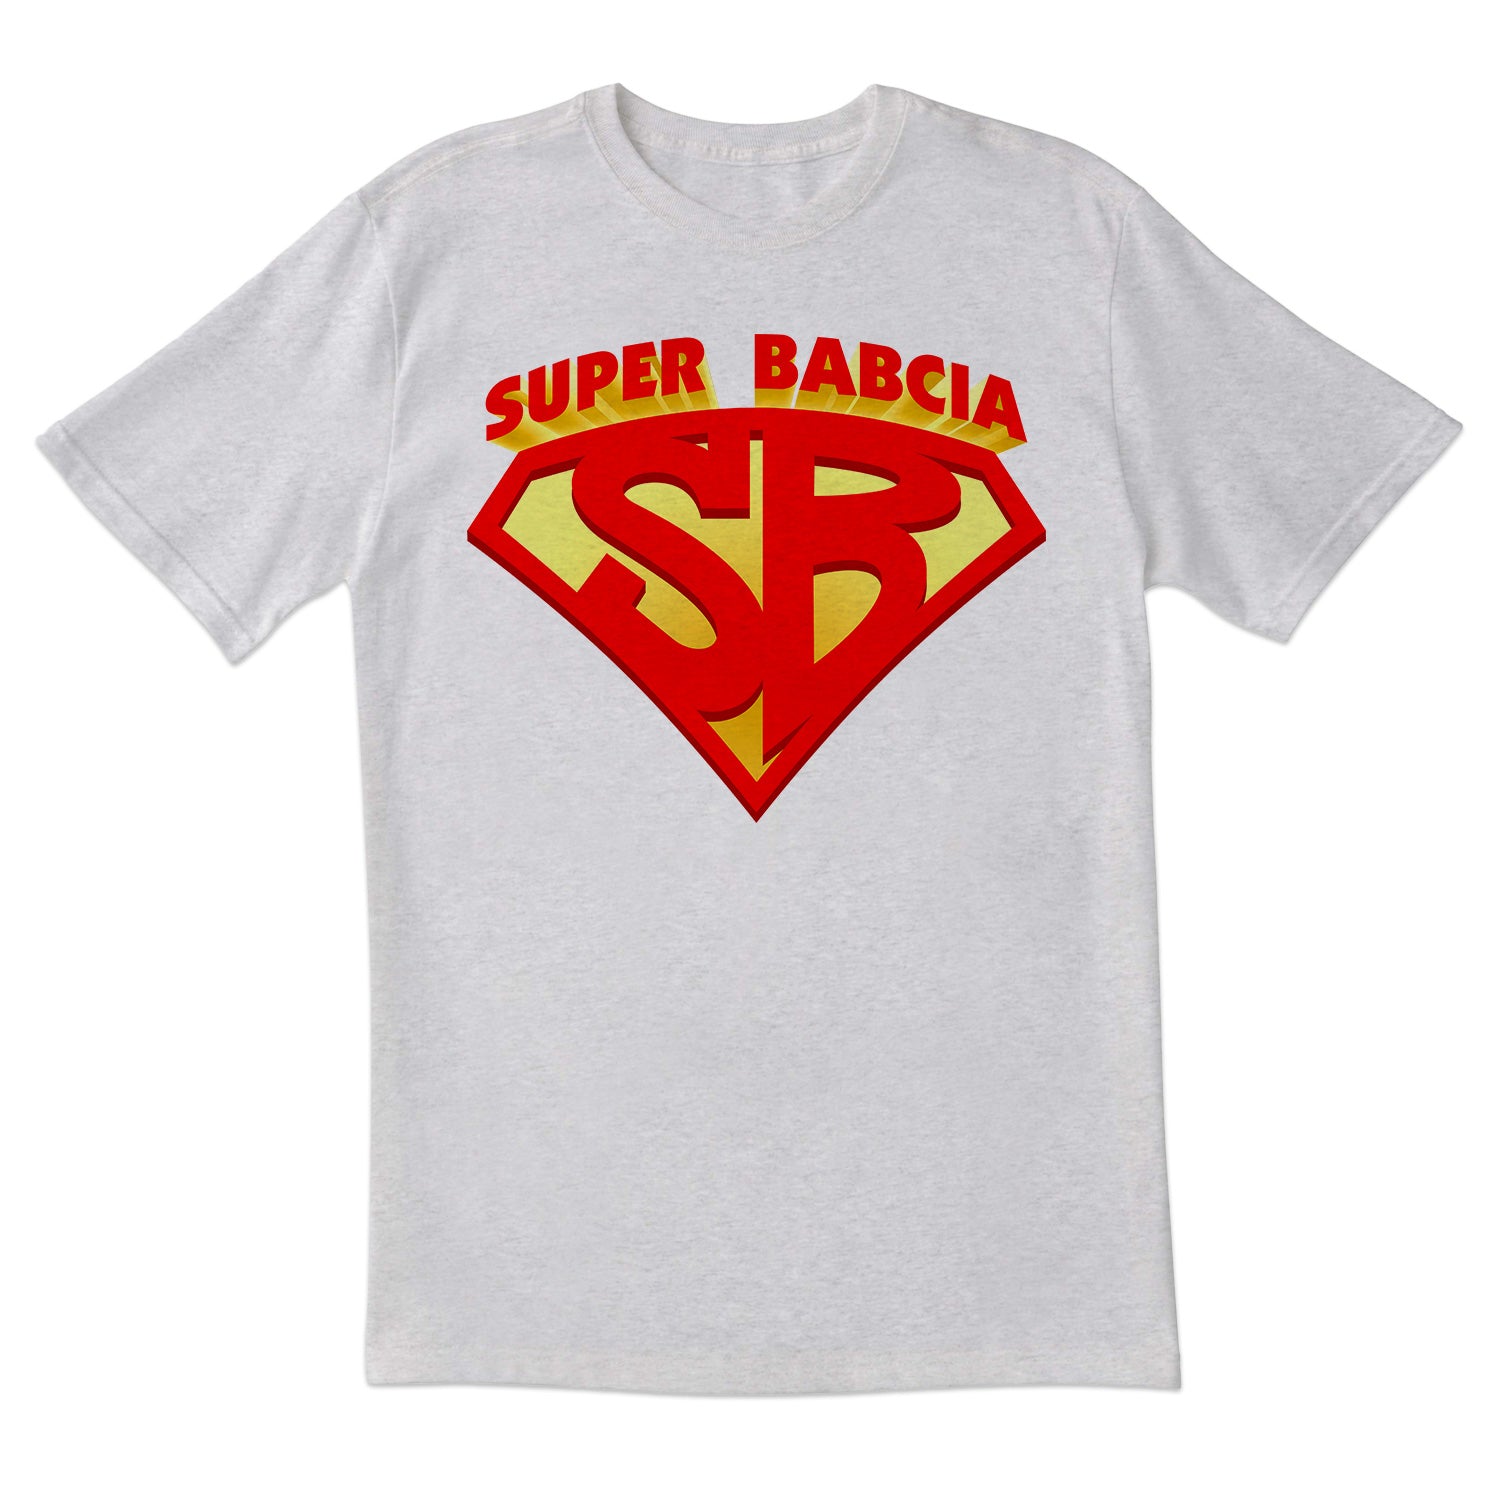 Super Babcia Short Sleeve Tshirt